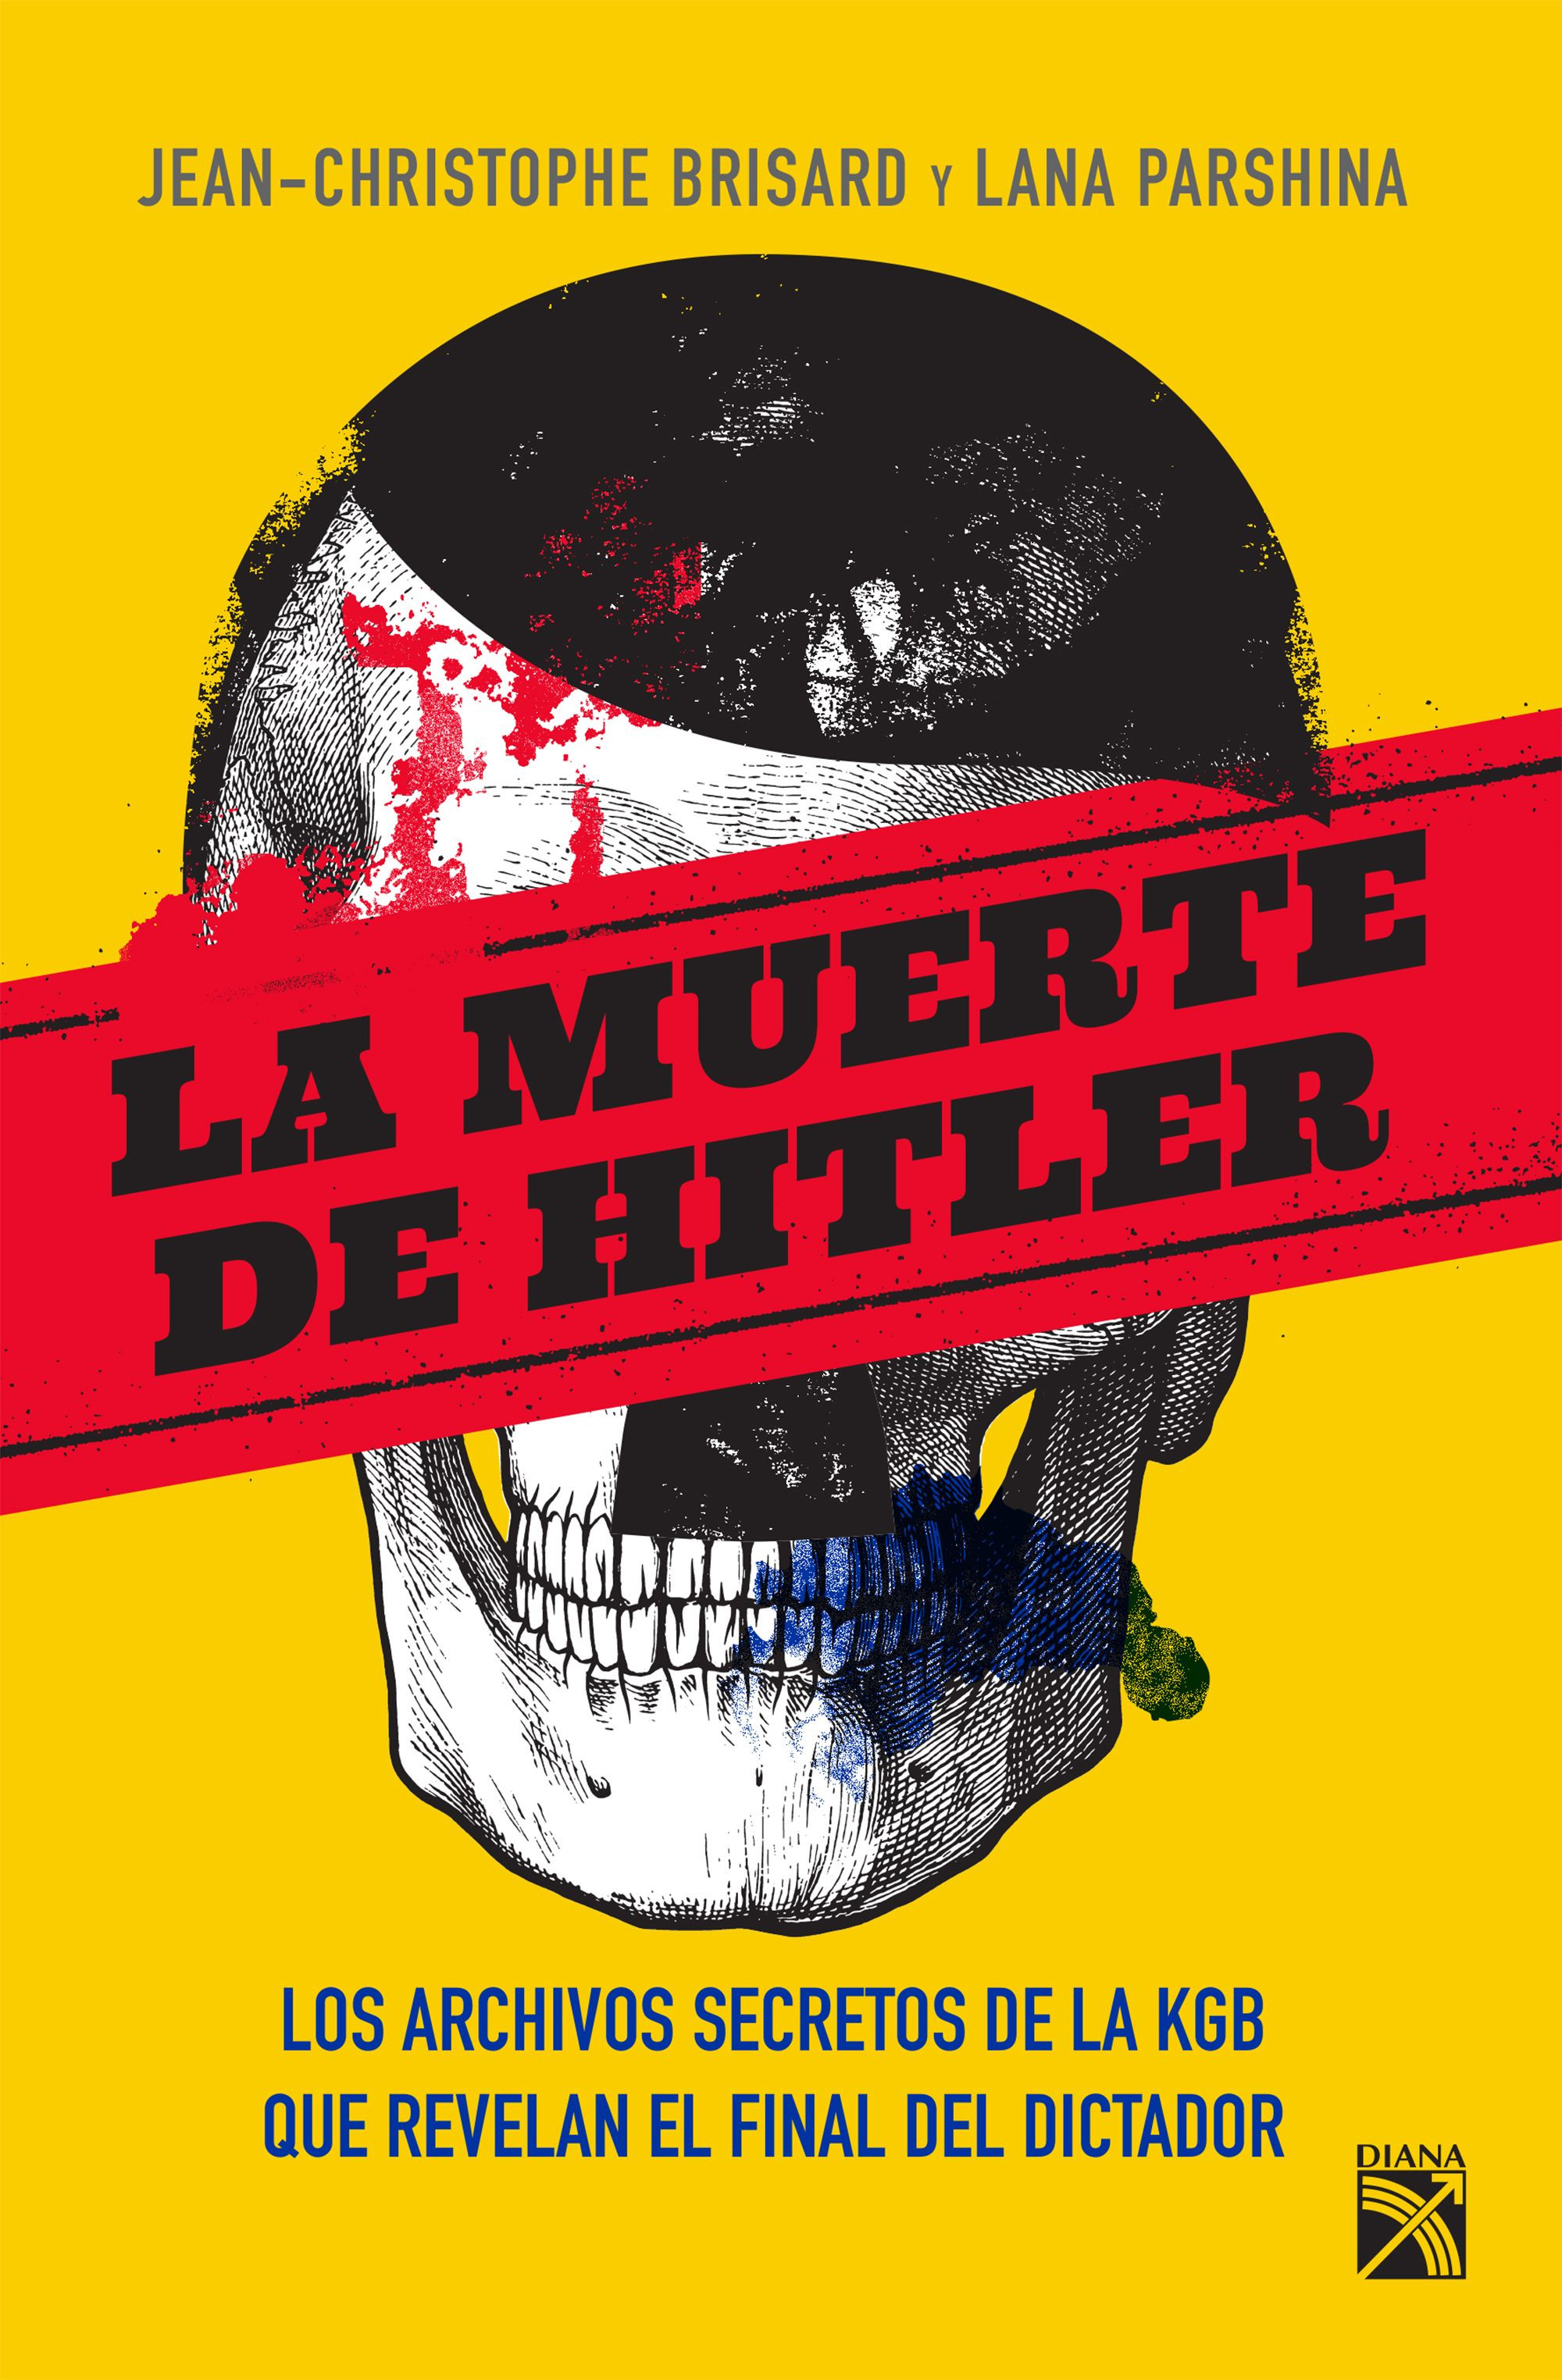 Imagen La muerte de Hitler. Jean - Christophe Brisard y Lana Parshina 1